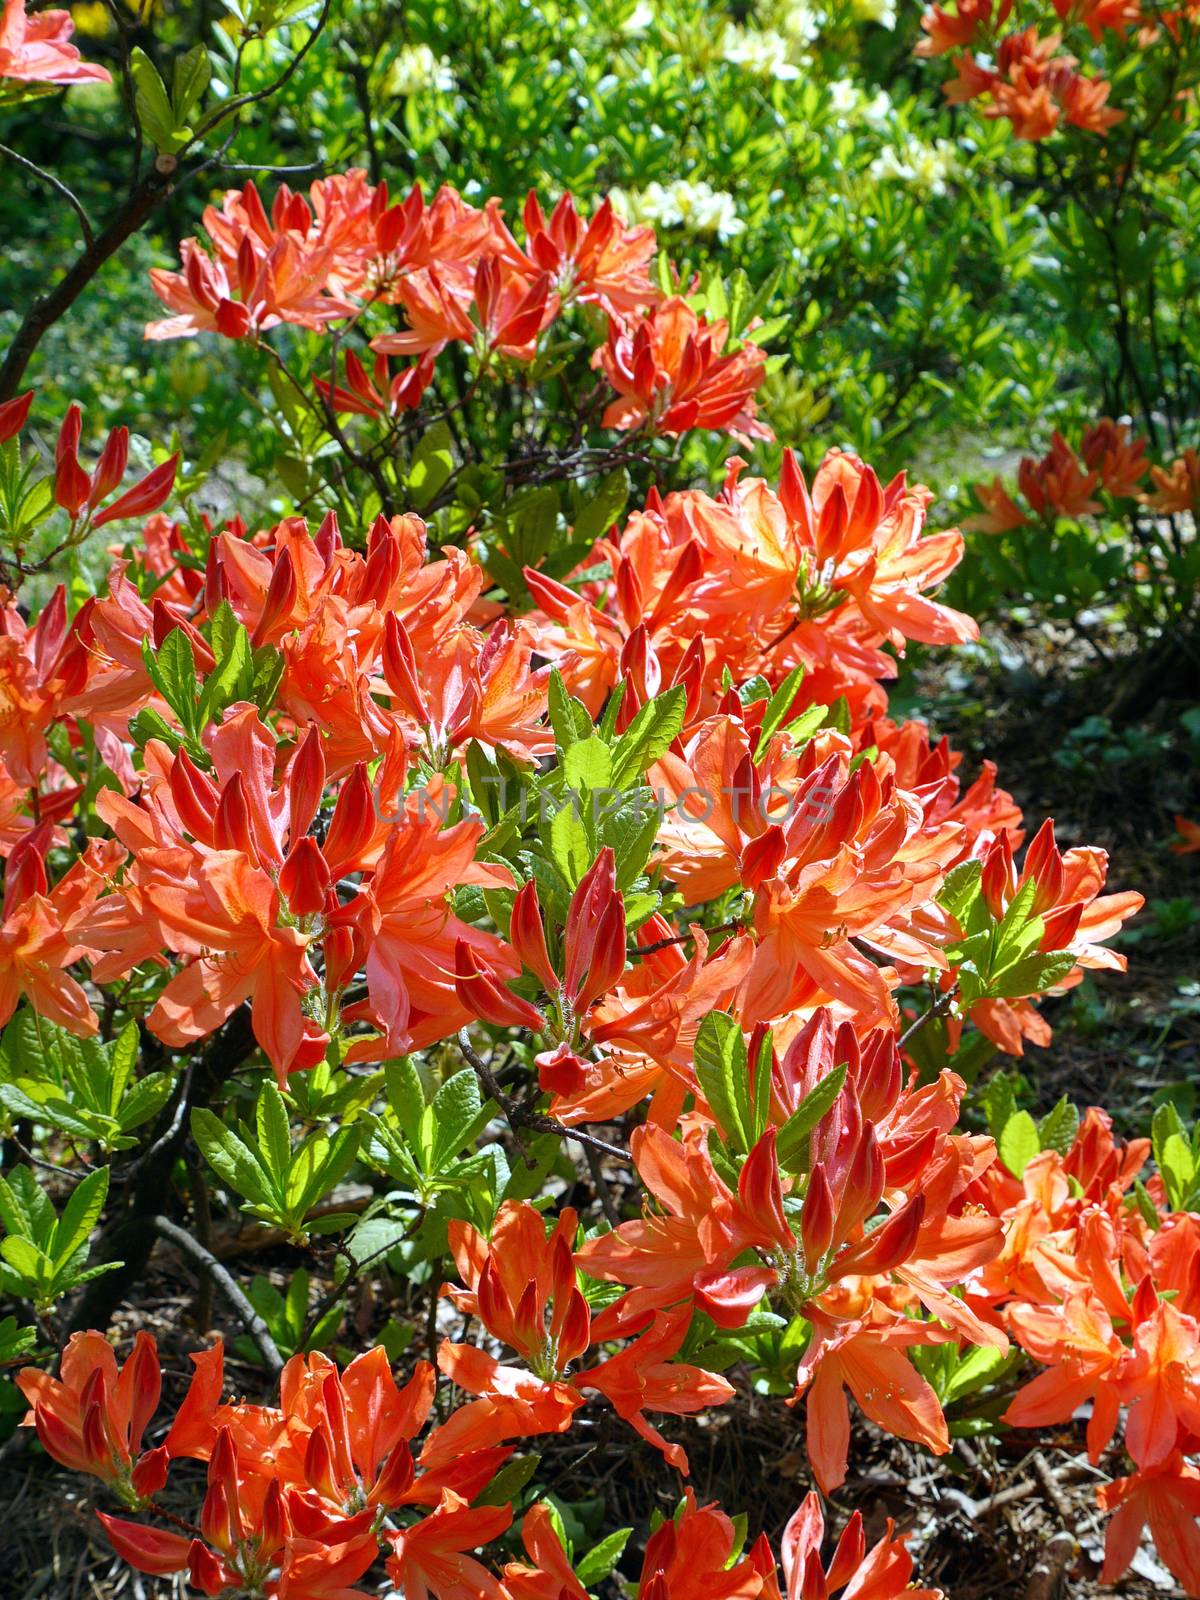 Dense, beautiful orange magnolia inflorescences in the park are illuminated by sunshine